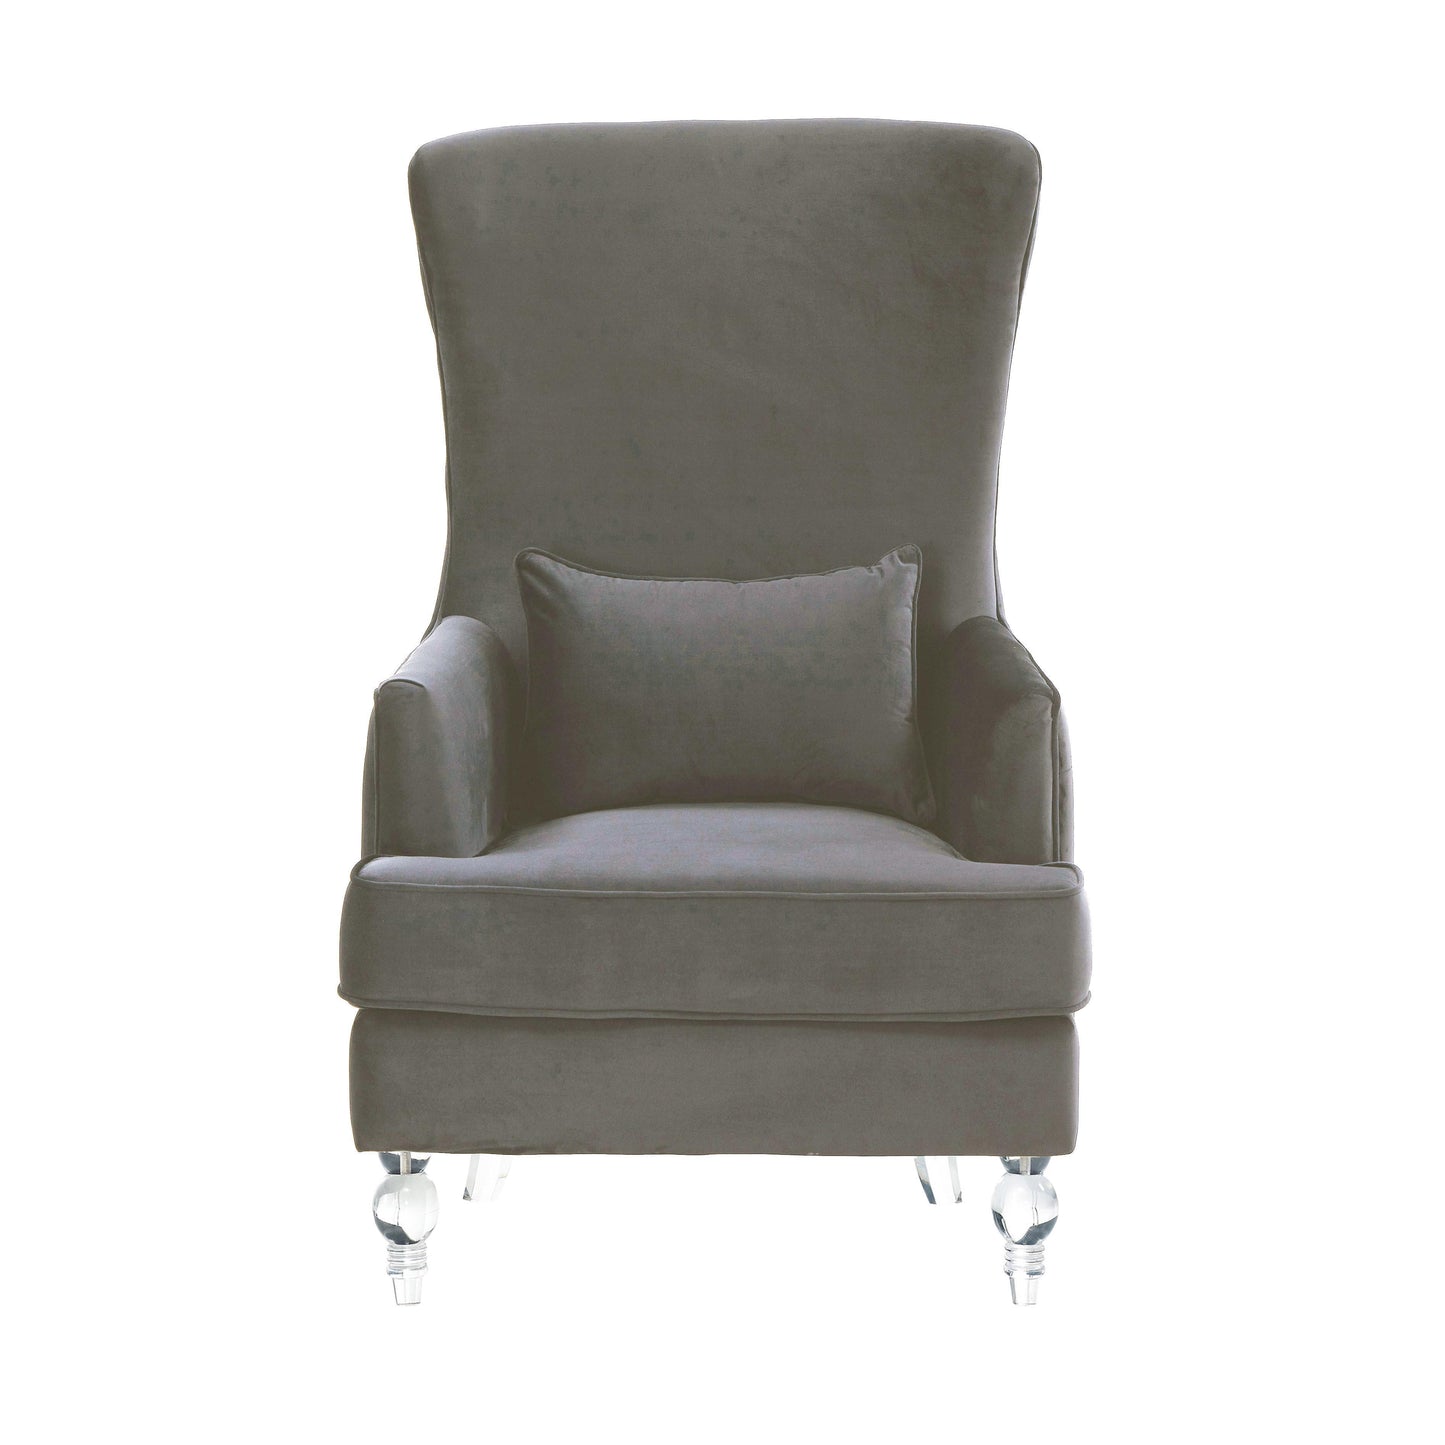 Aubree - Tall Chair with Acrylic Legs